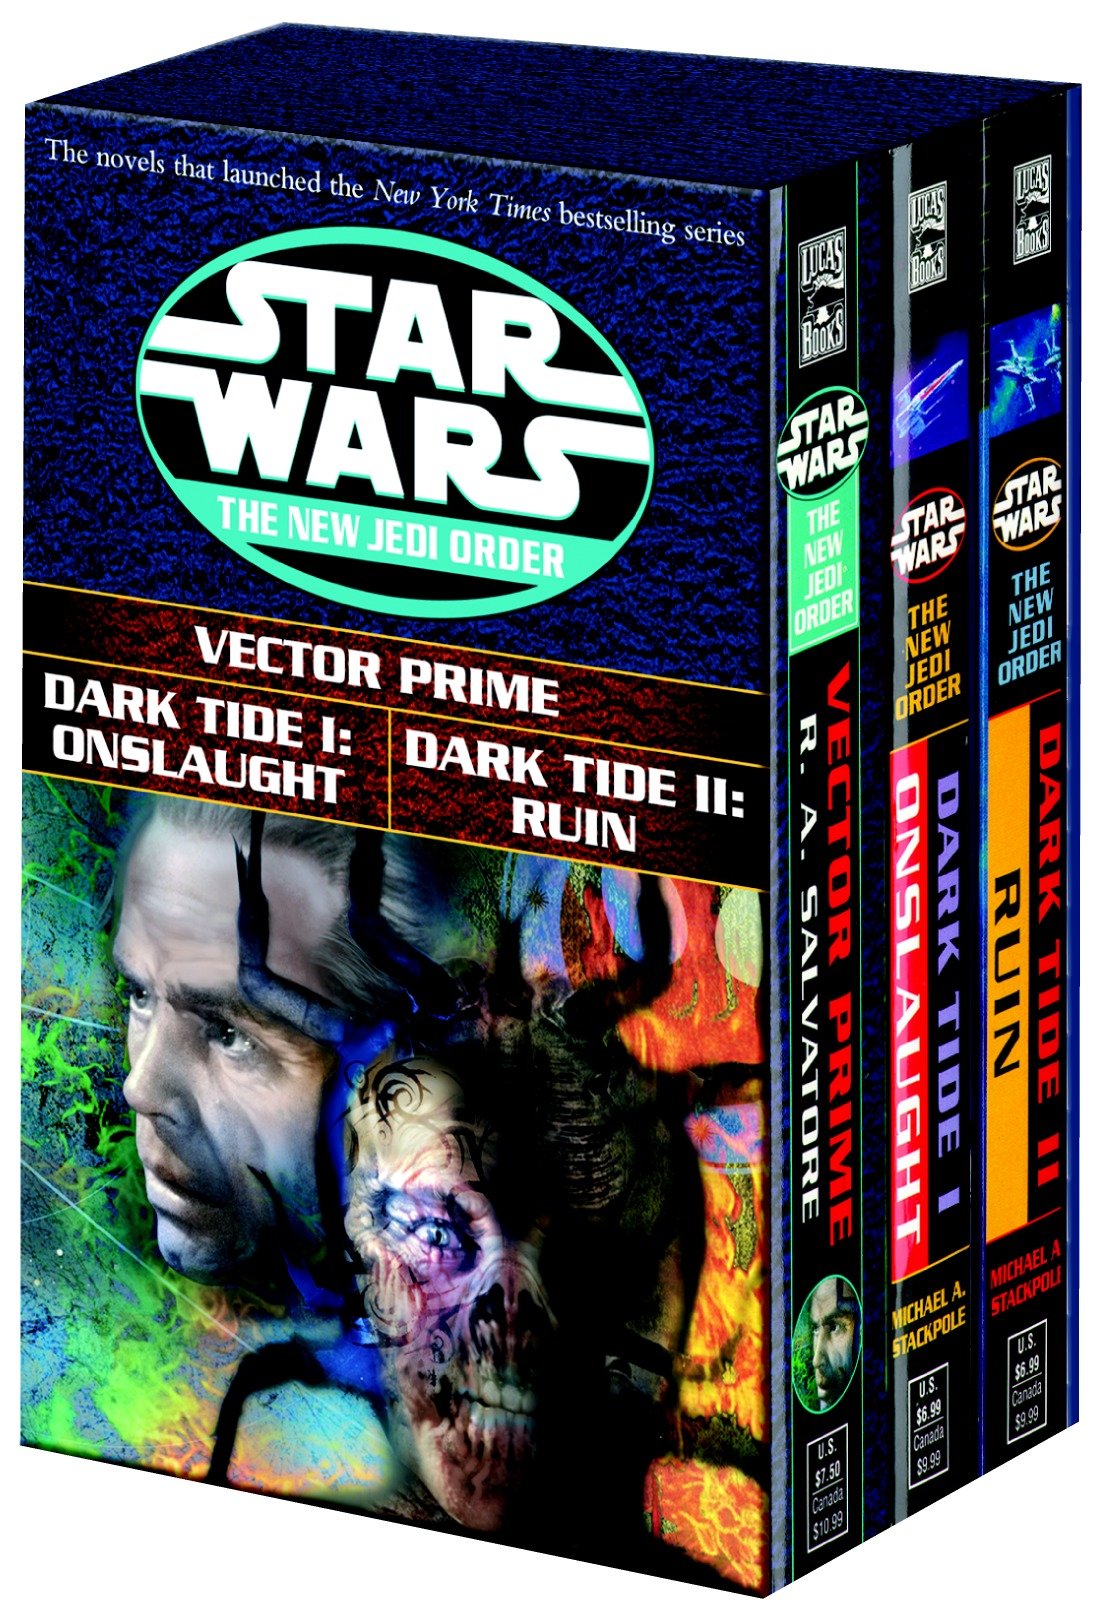 Star Wars New Jedi Order Paperback Boxed Set Volume 1